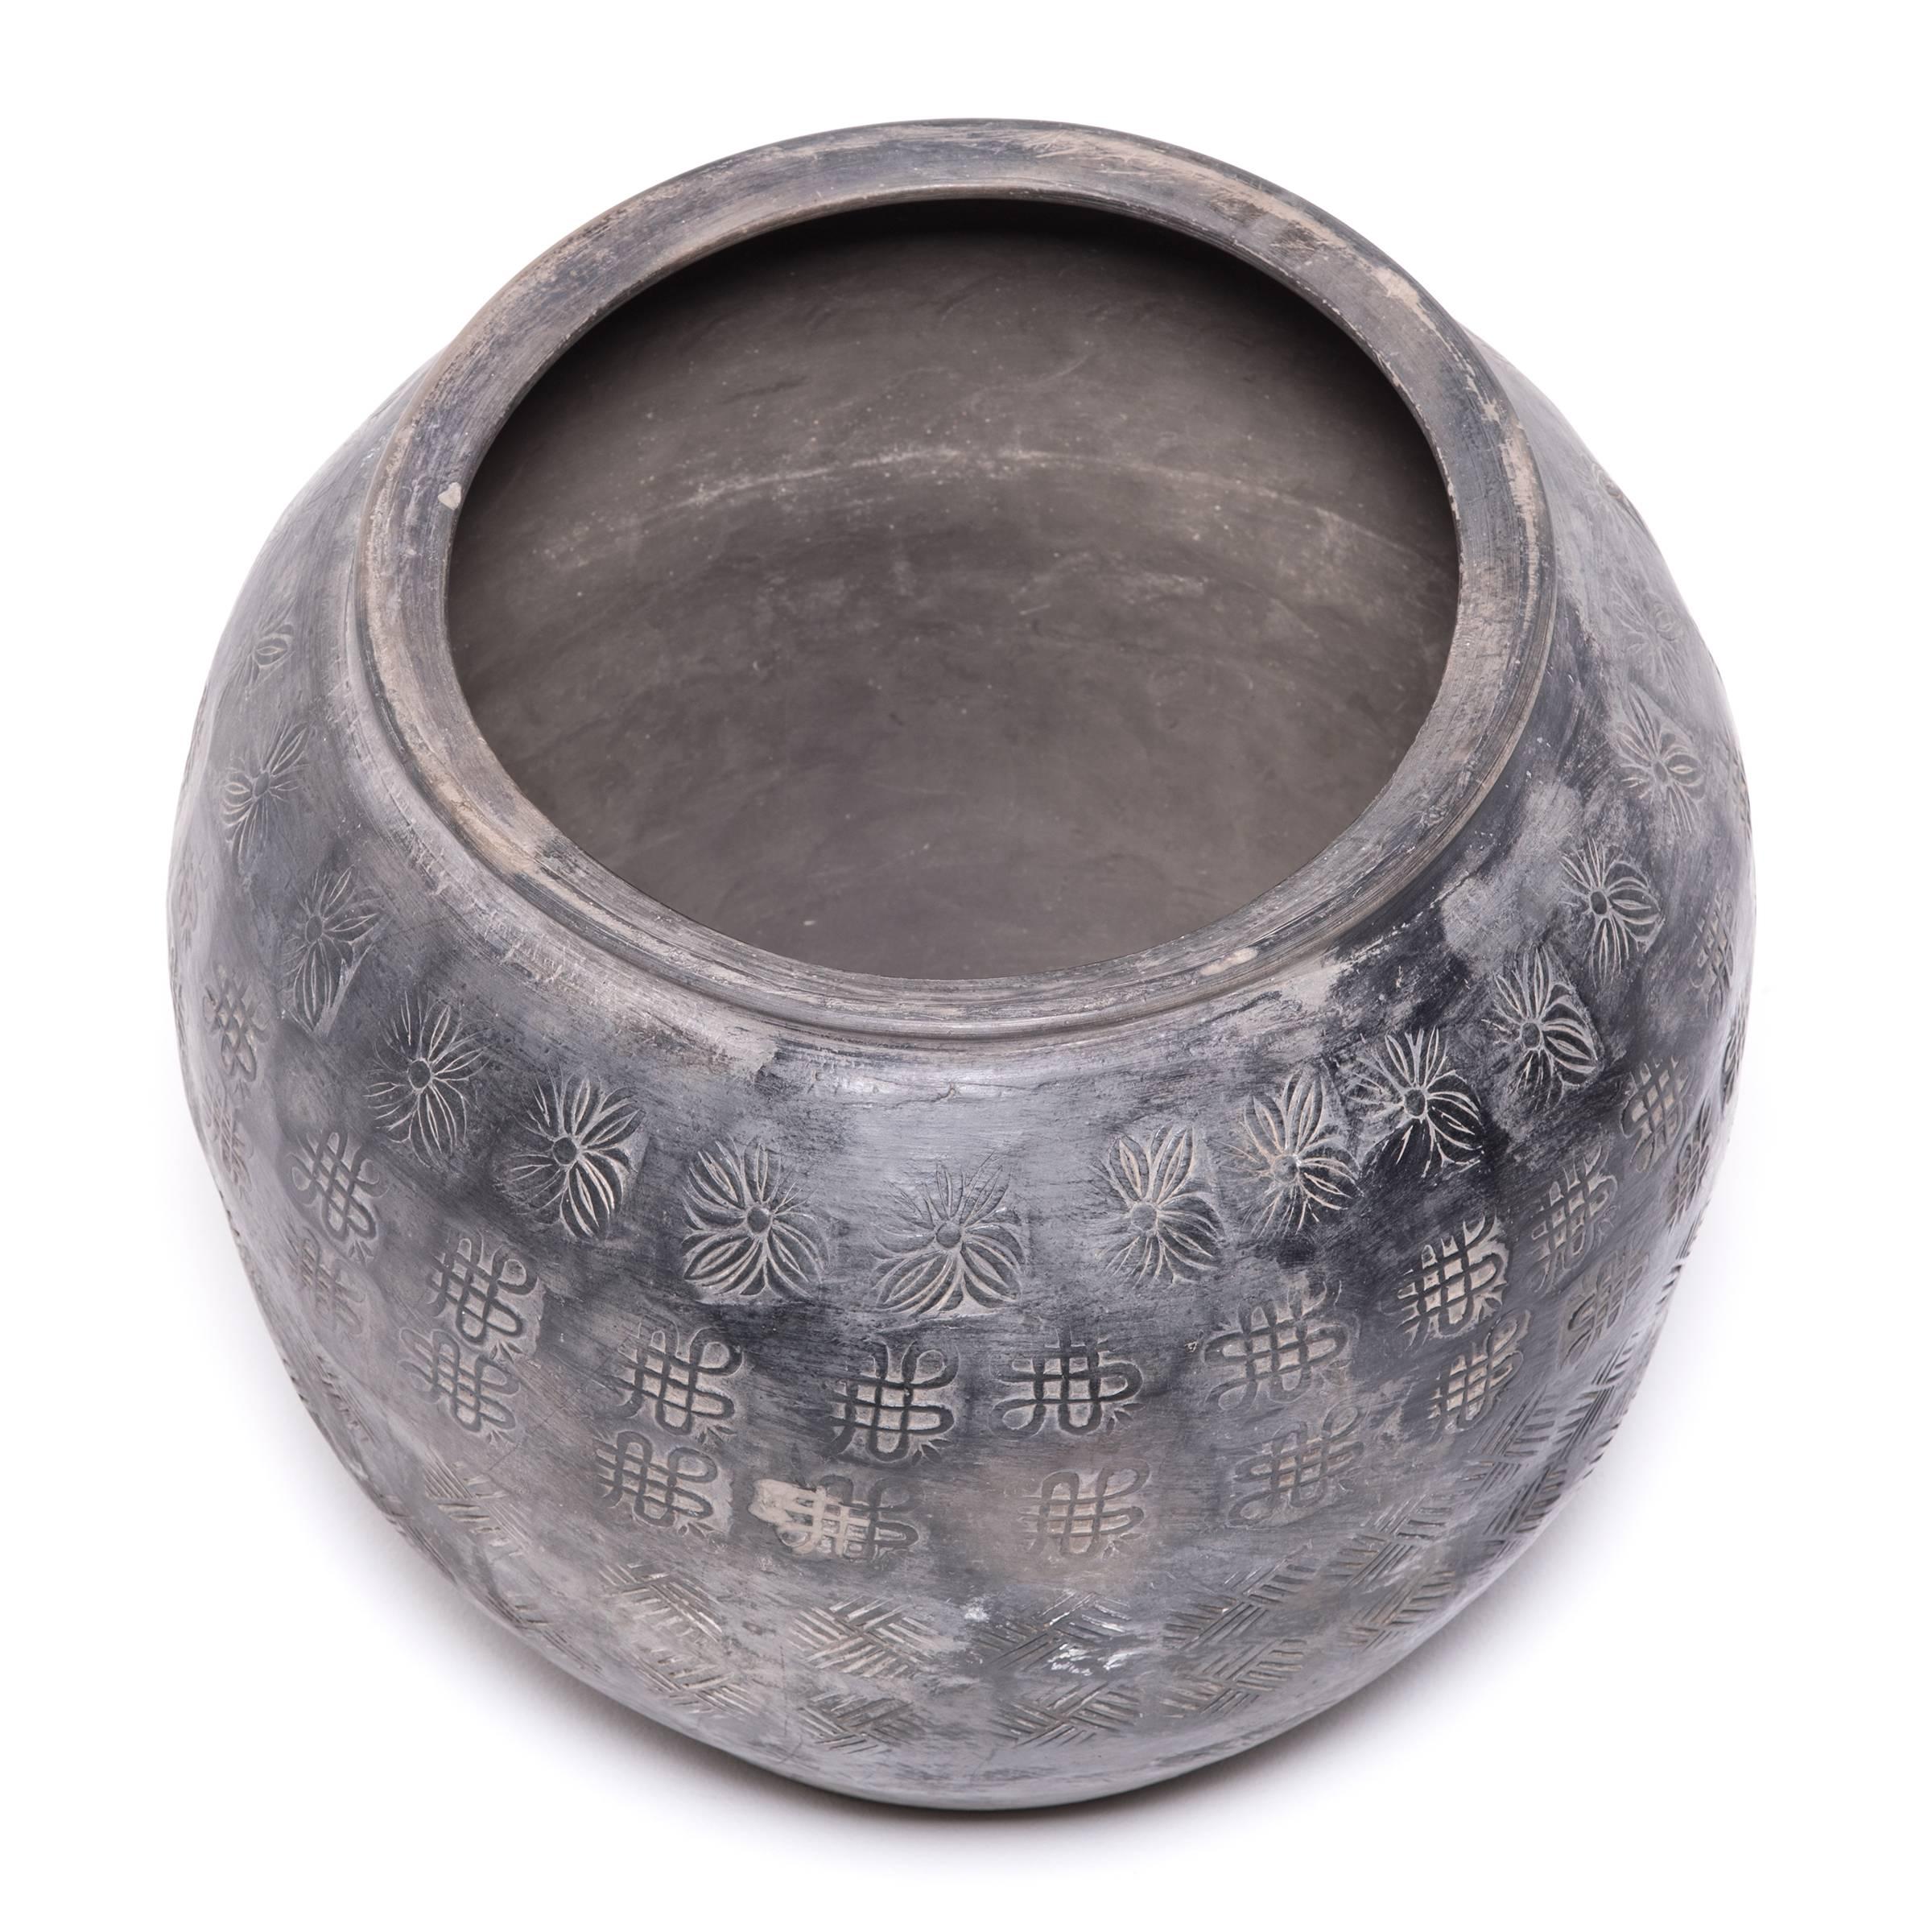 19th Century Chinese Unglazed Stamped Clay Jar